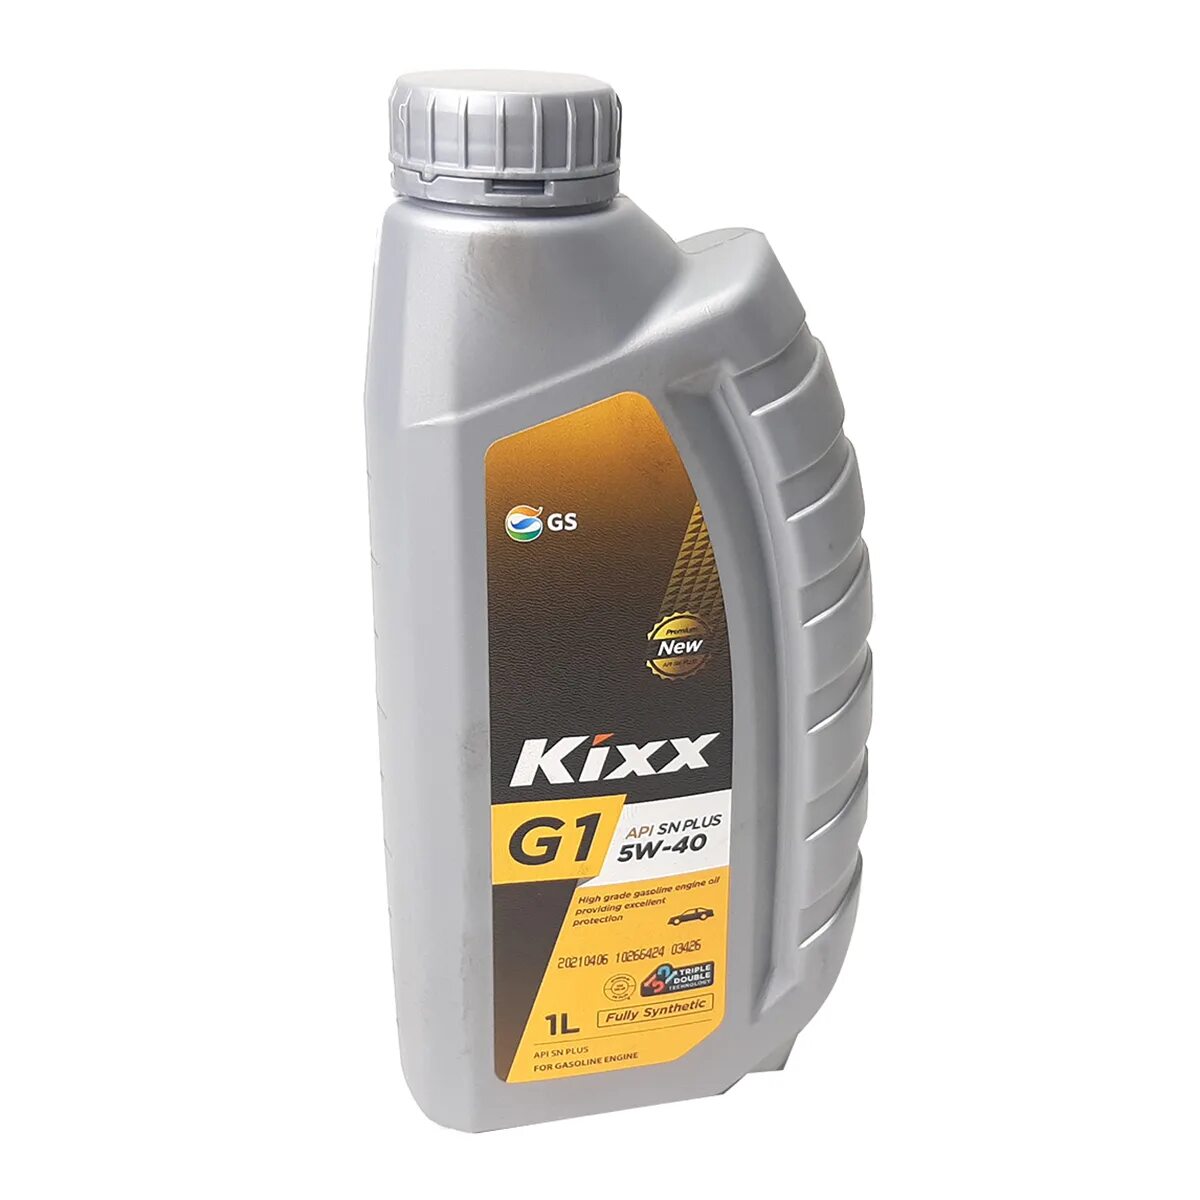 Kixx l2508al1e1. Kixx 5w40 синтетика. Kixx g1 5w-40. Kixx g1 SP 5w-40. Полусинтетическое моторное масло 5w40